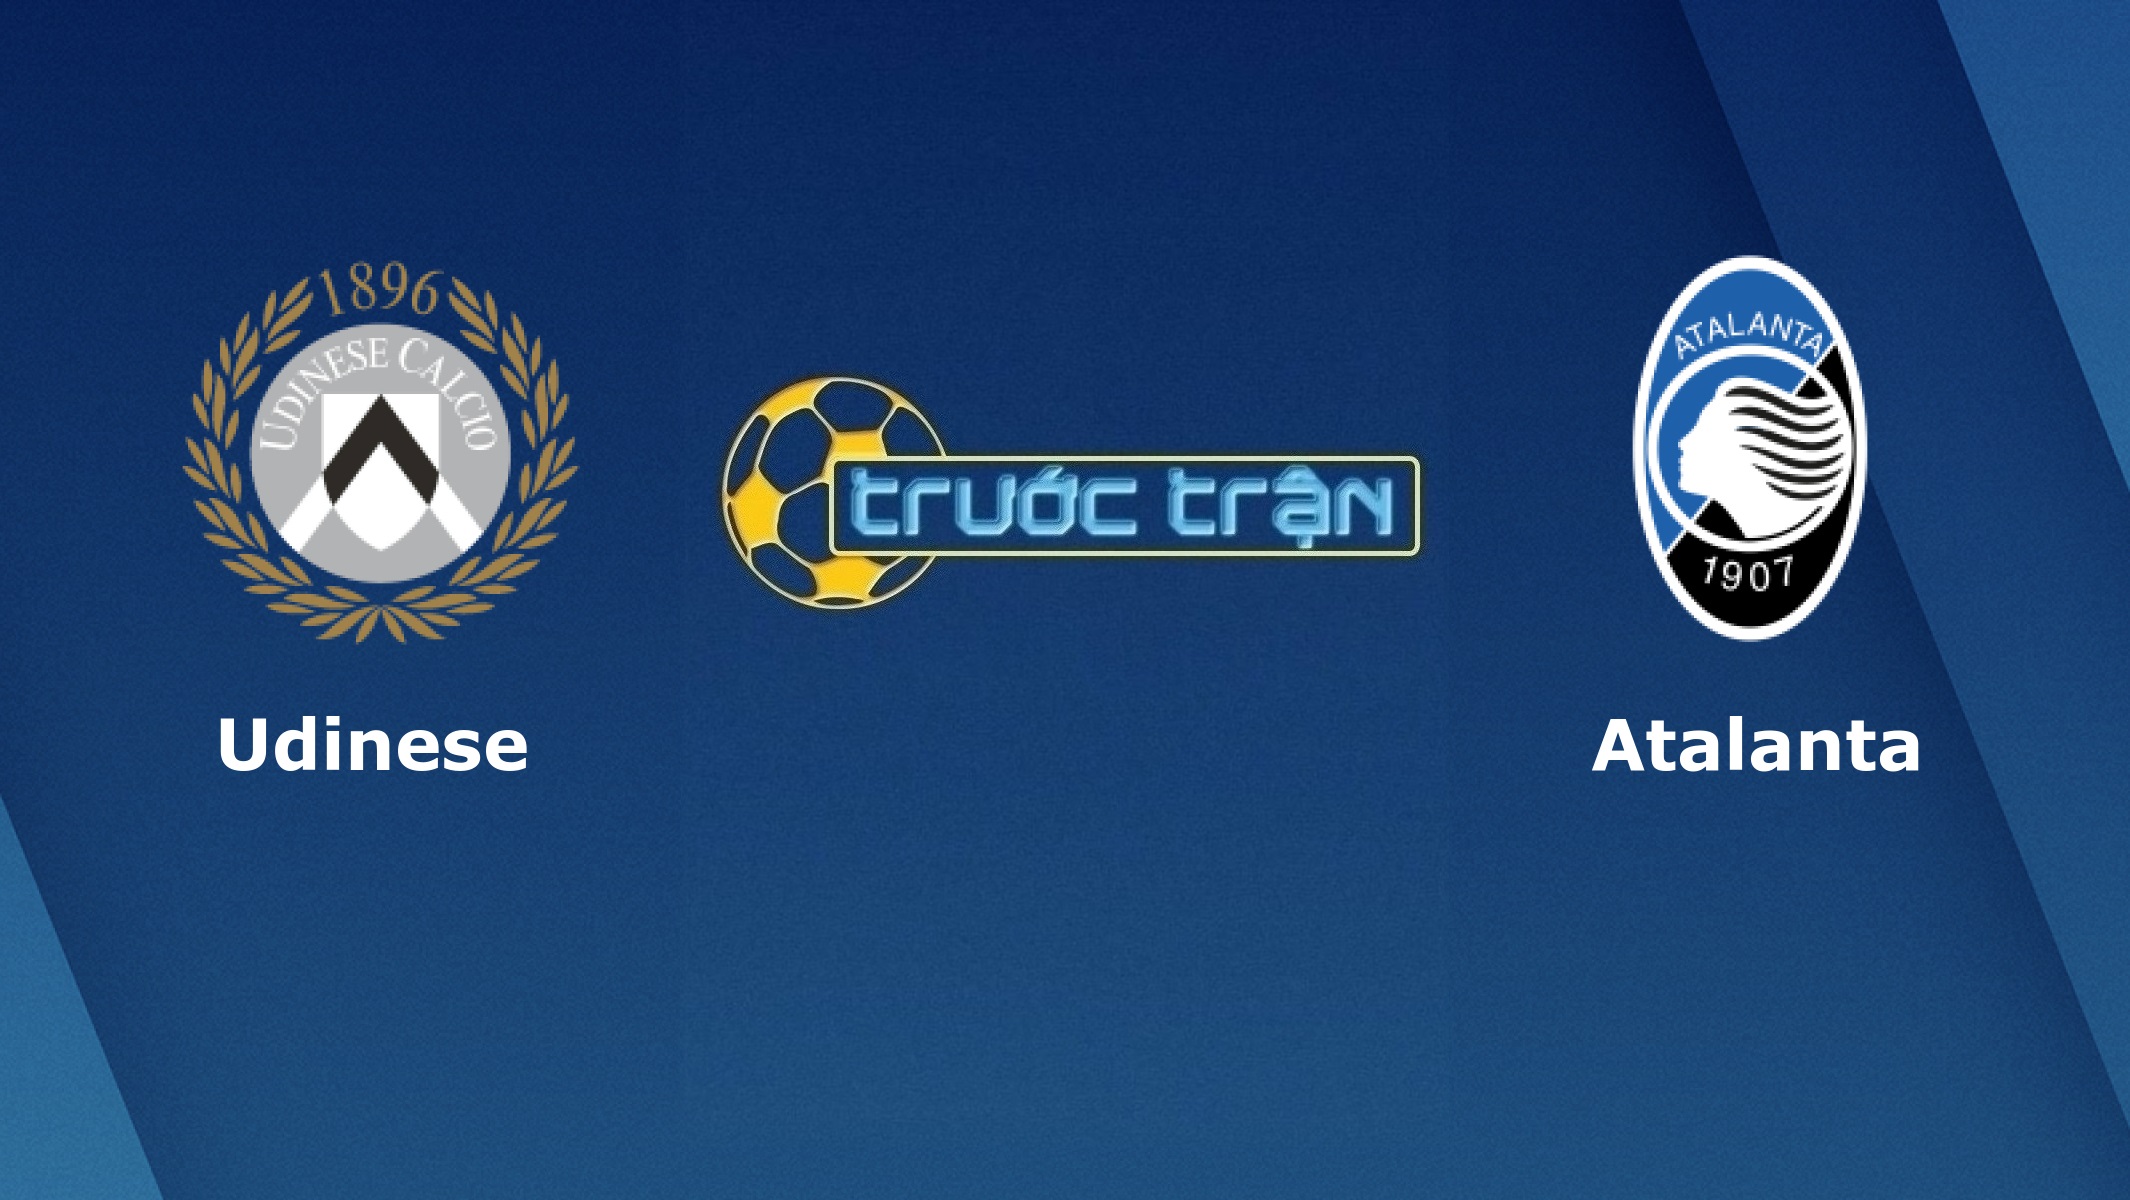 Udinese vs Atalanta – Tip kèo bóng đá hôm nay – 21h00 06/12/2020